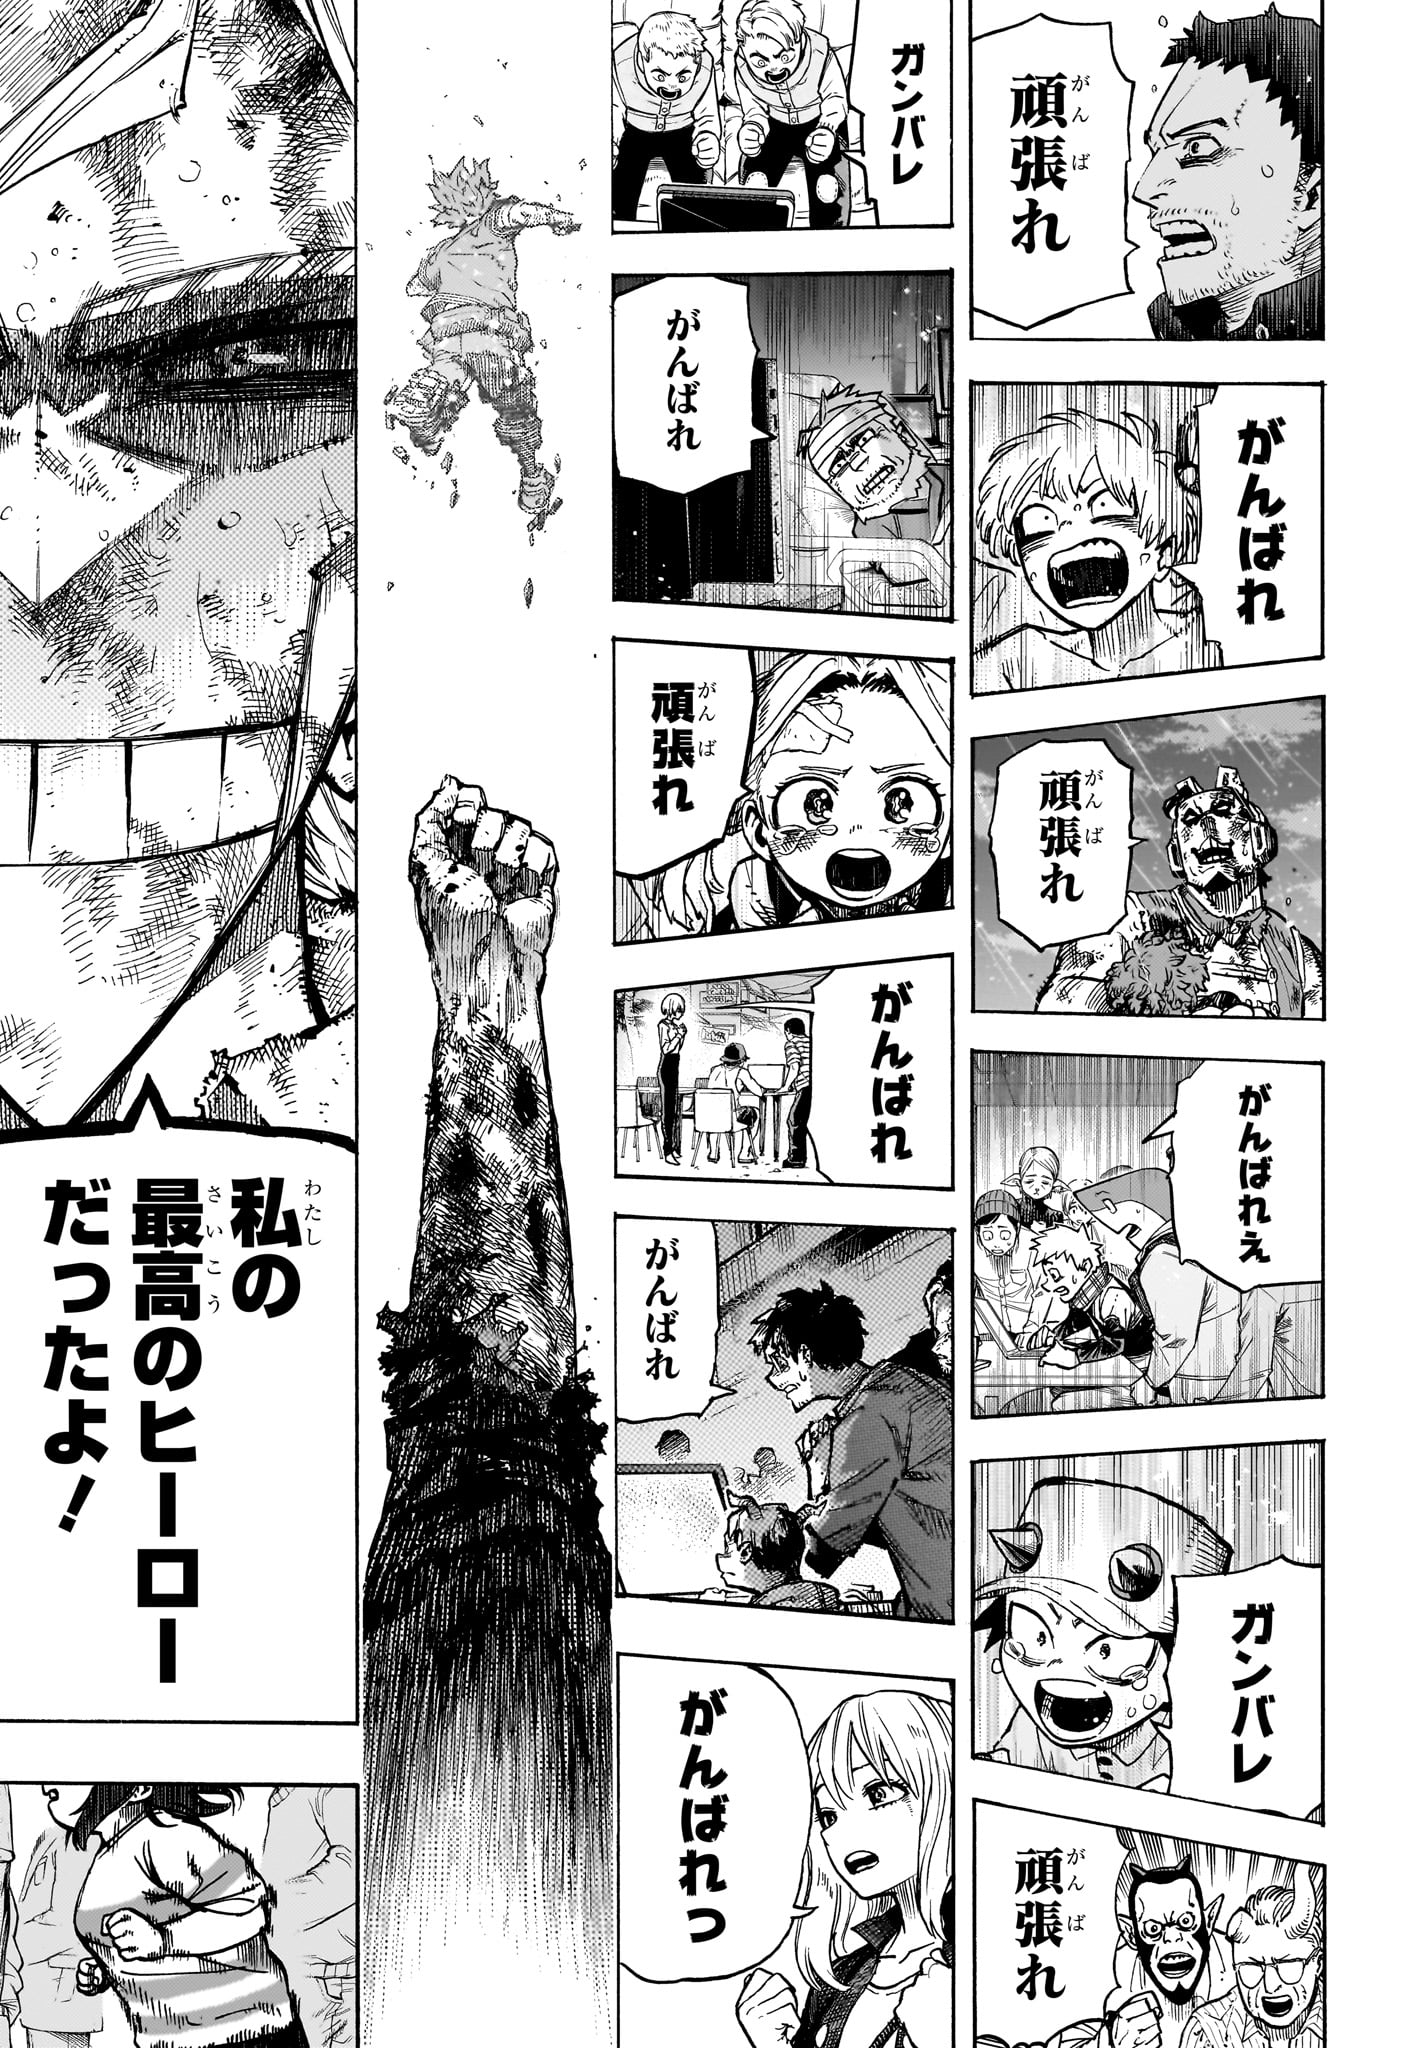 Boku no Hero Academia - Chapter 422 - Page 13